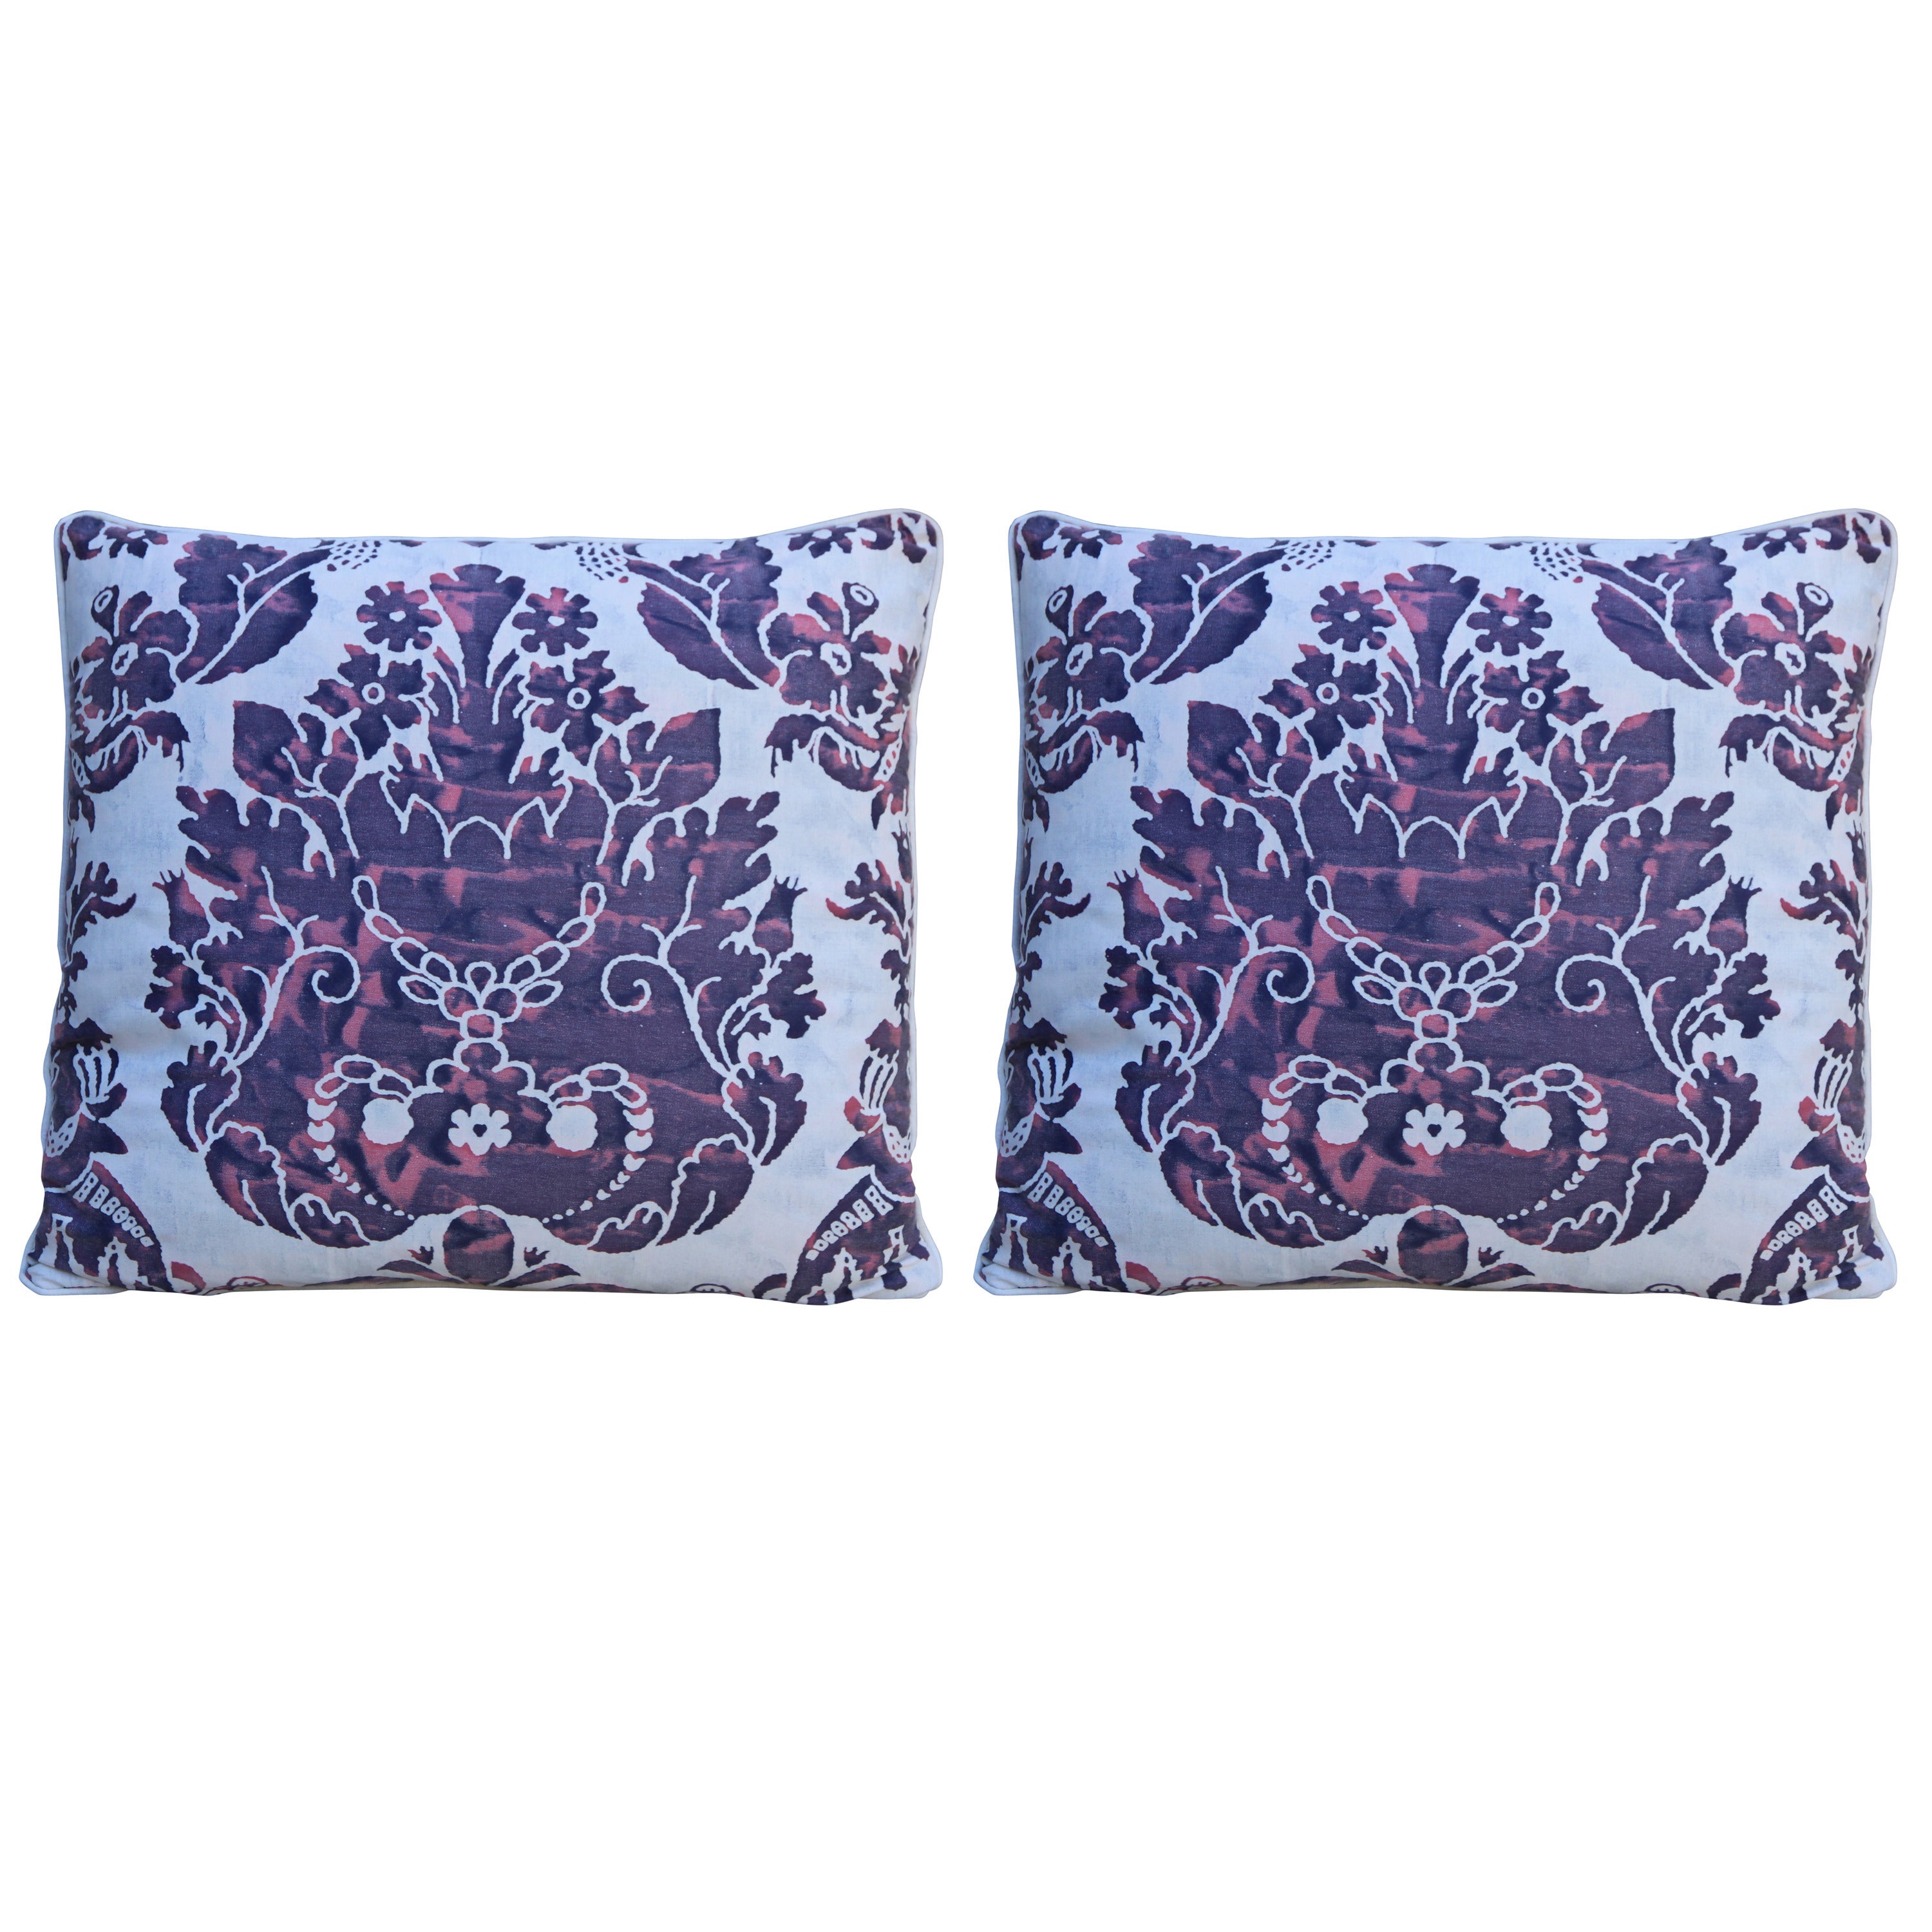 Pair of Vivaldi Fortuny Textile Pillows